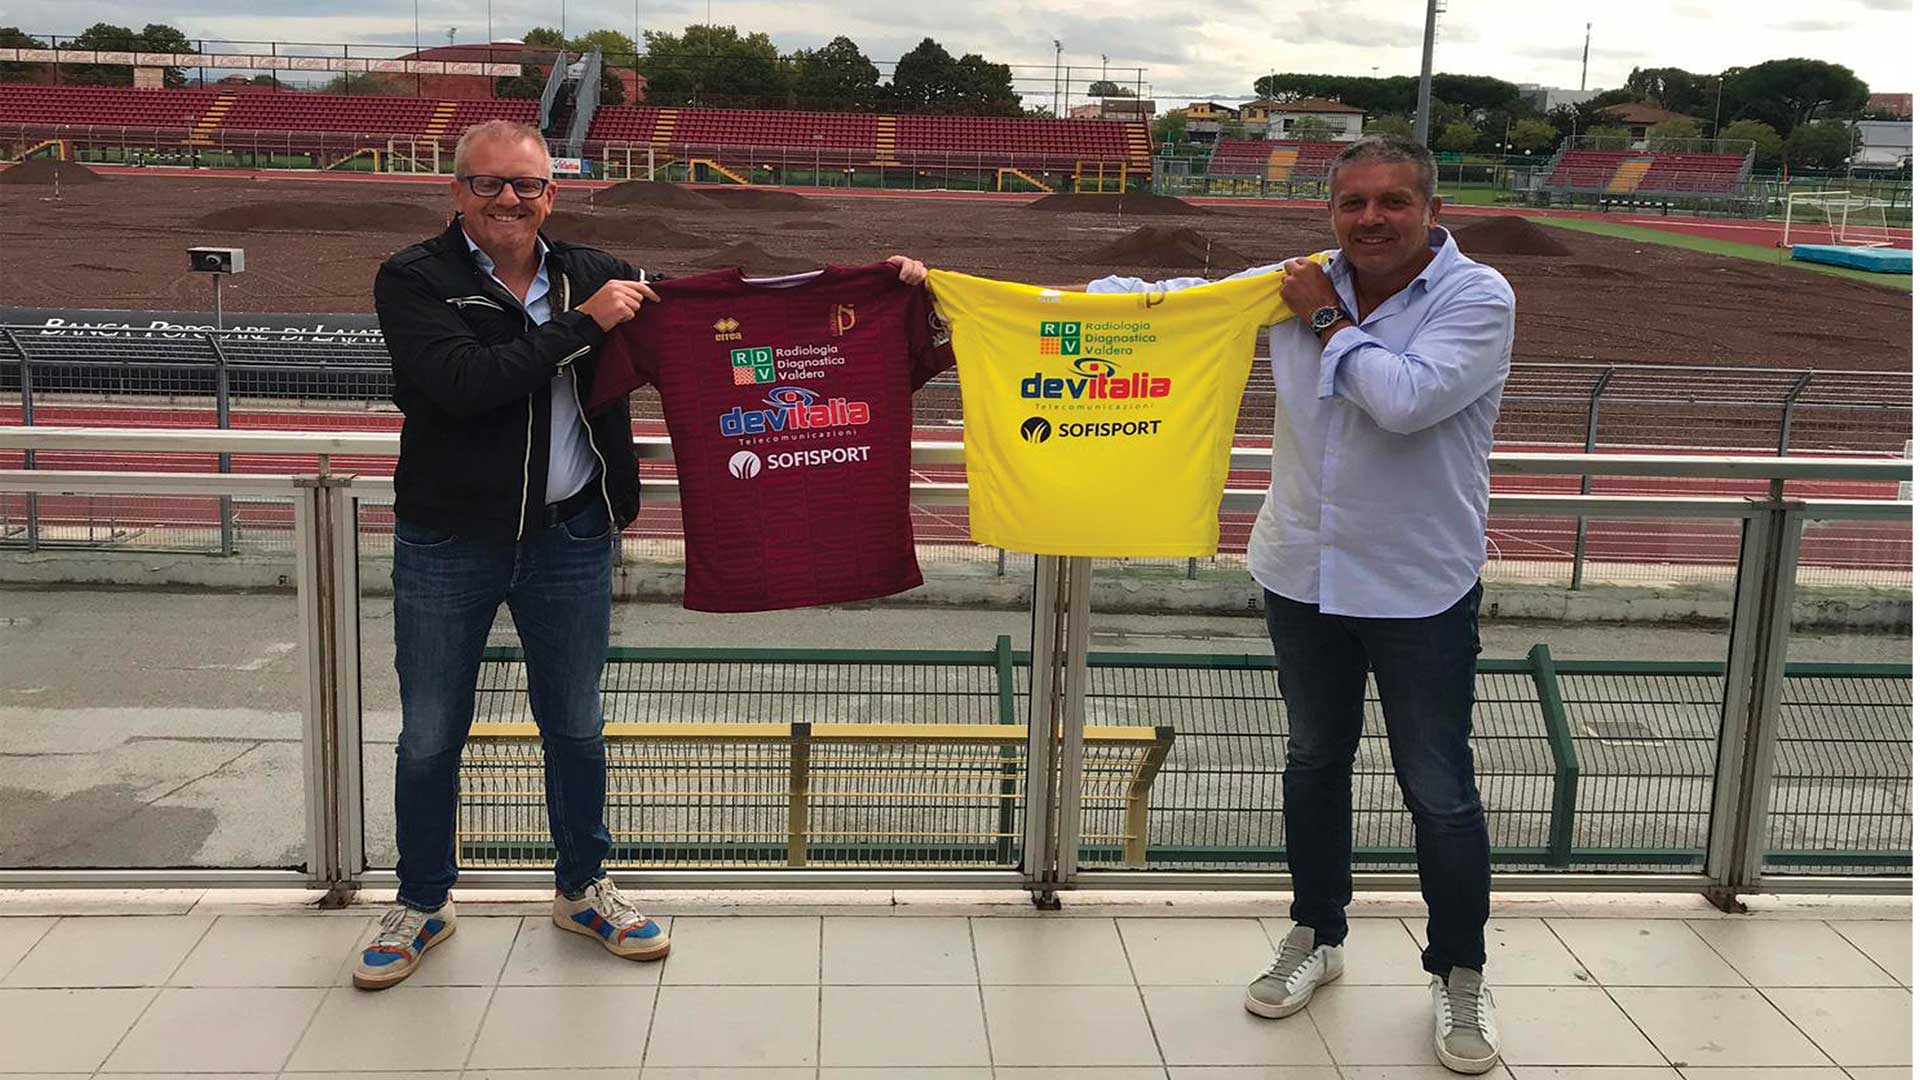 Sponsorship of the Pontedera football team, Italy.